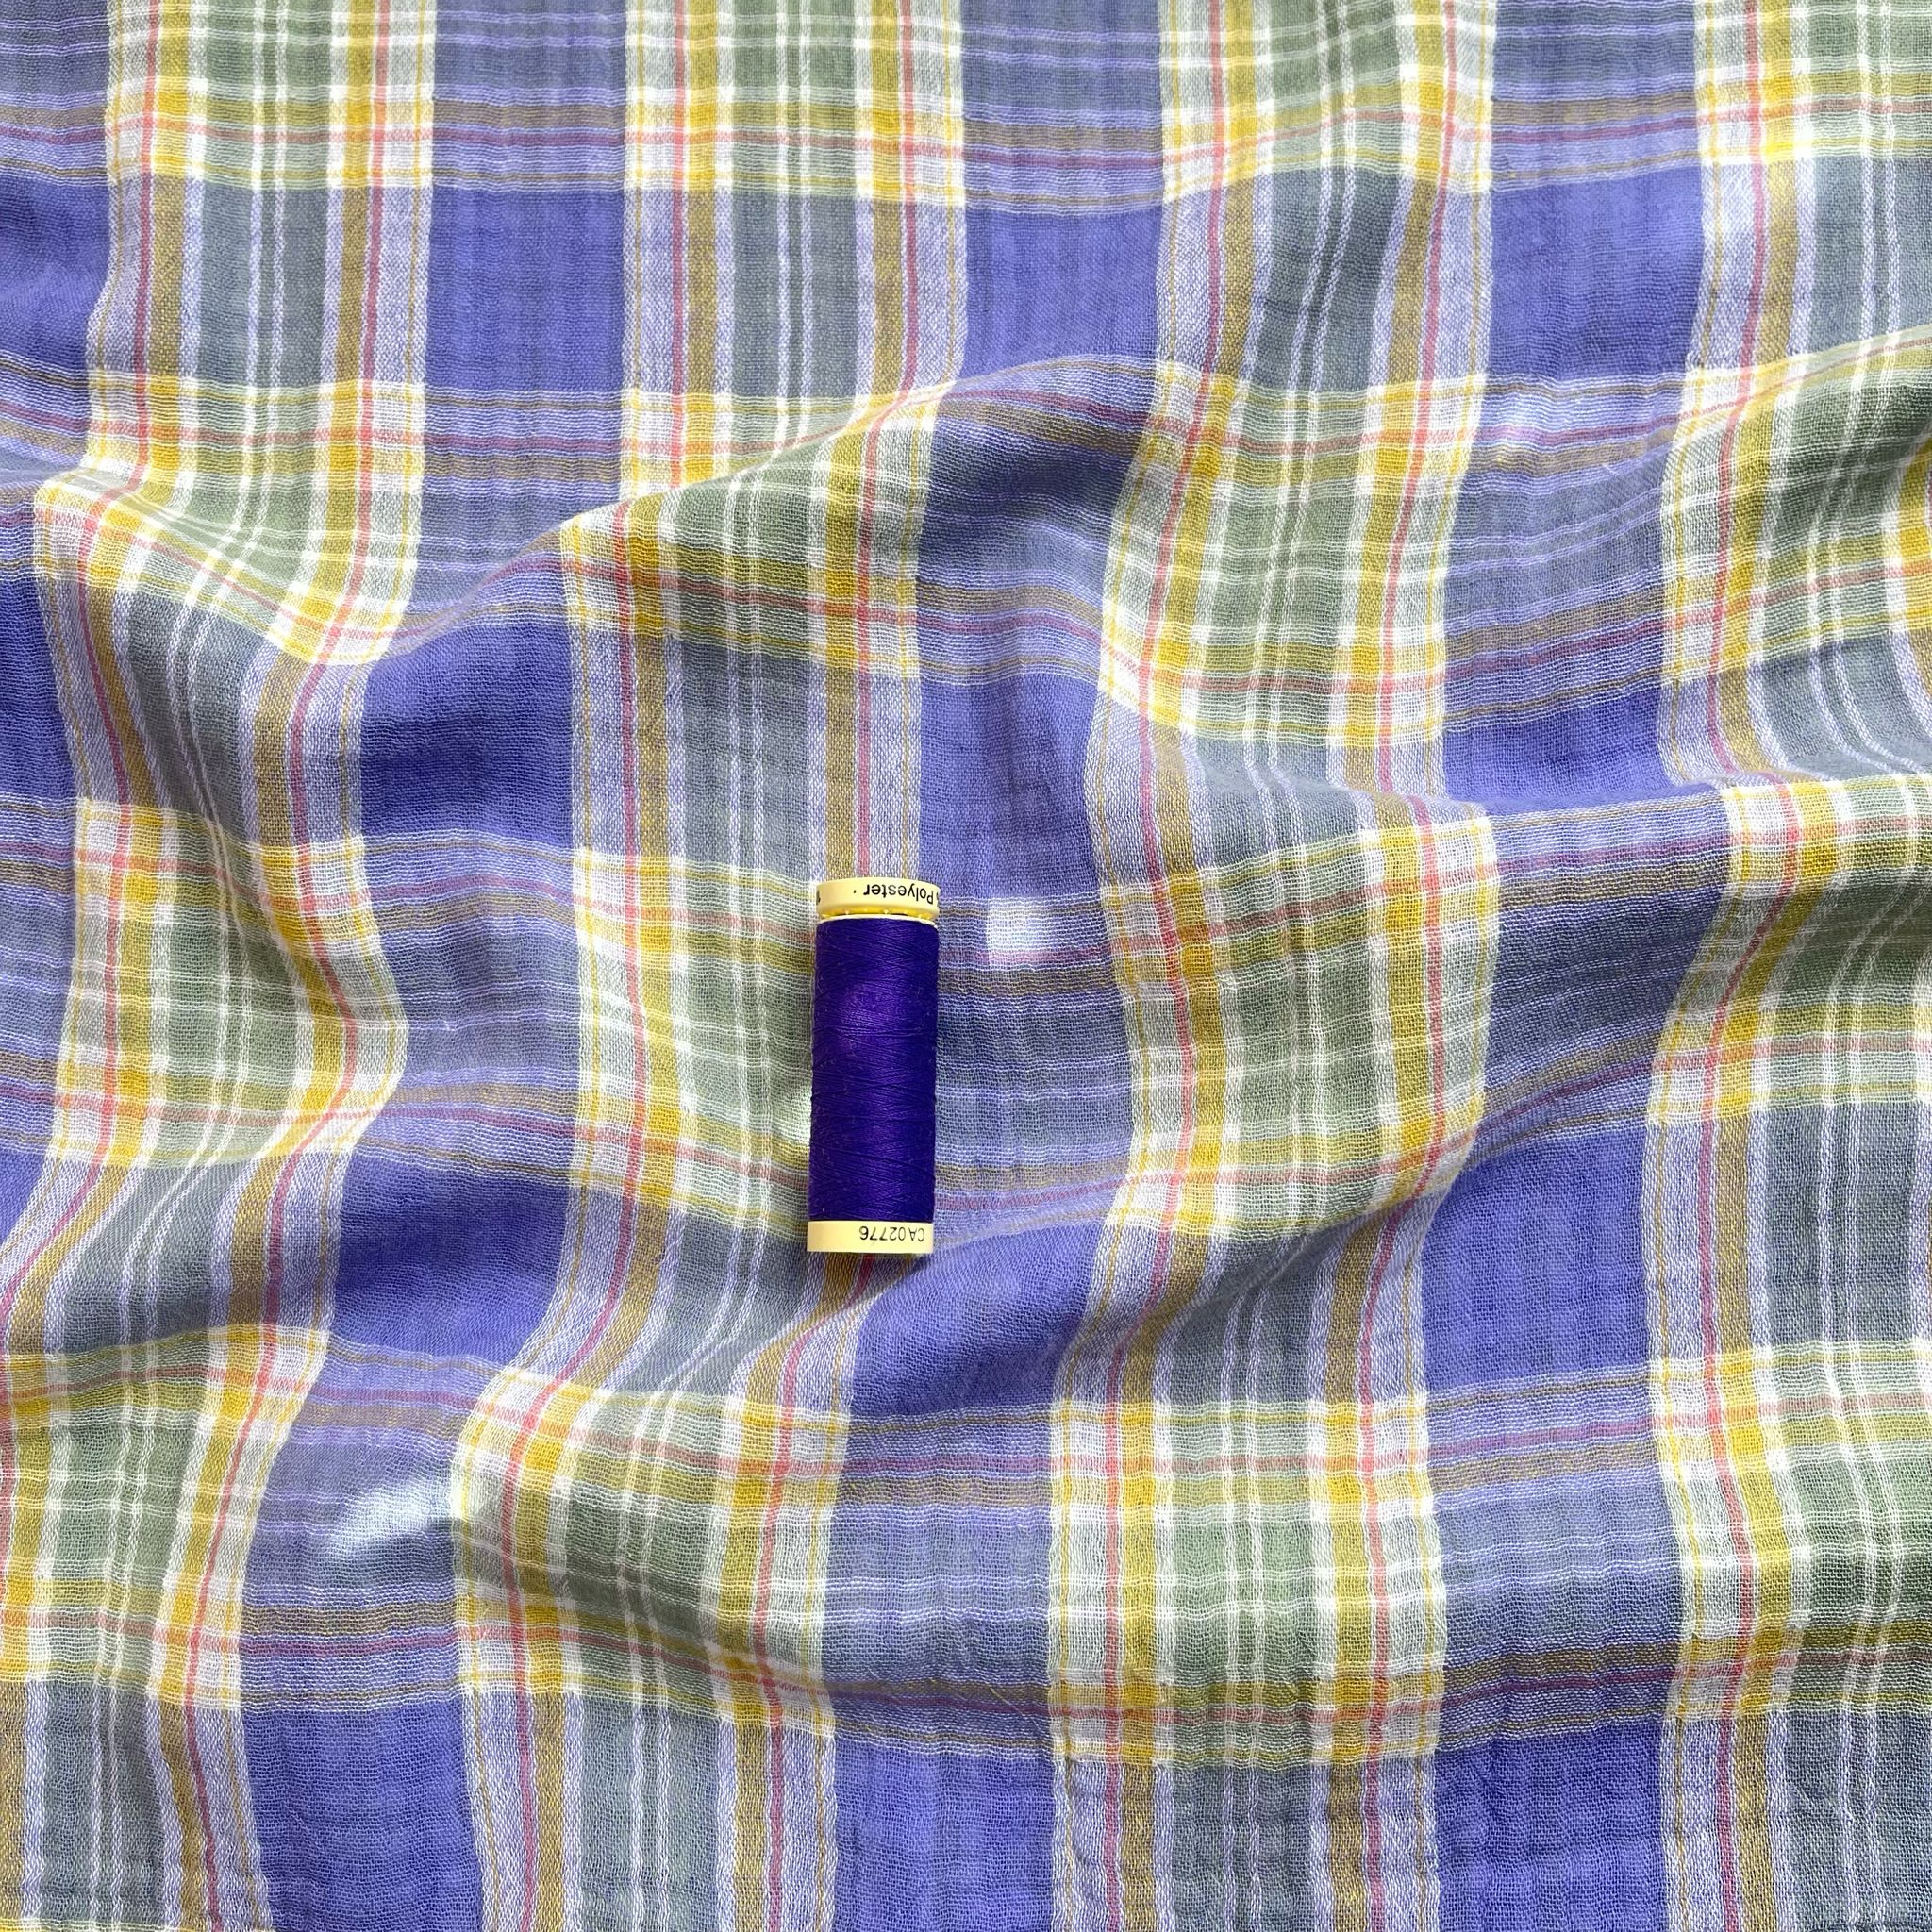 REMNANT 1.5 Metres - Reversible Purple Checked Cotton Double Gauze